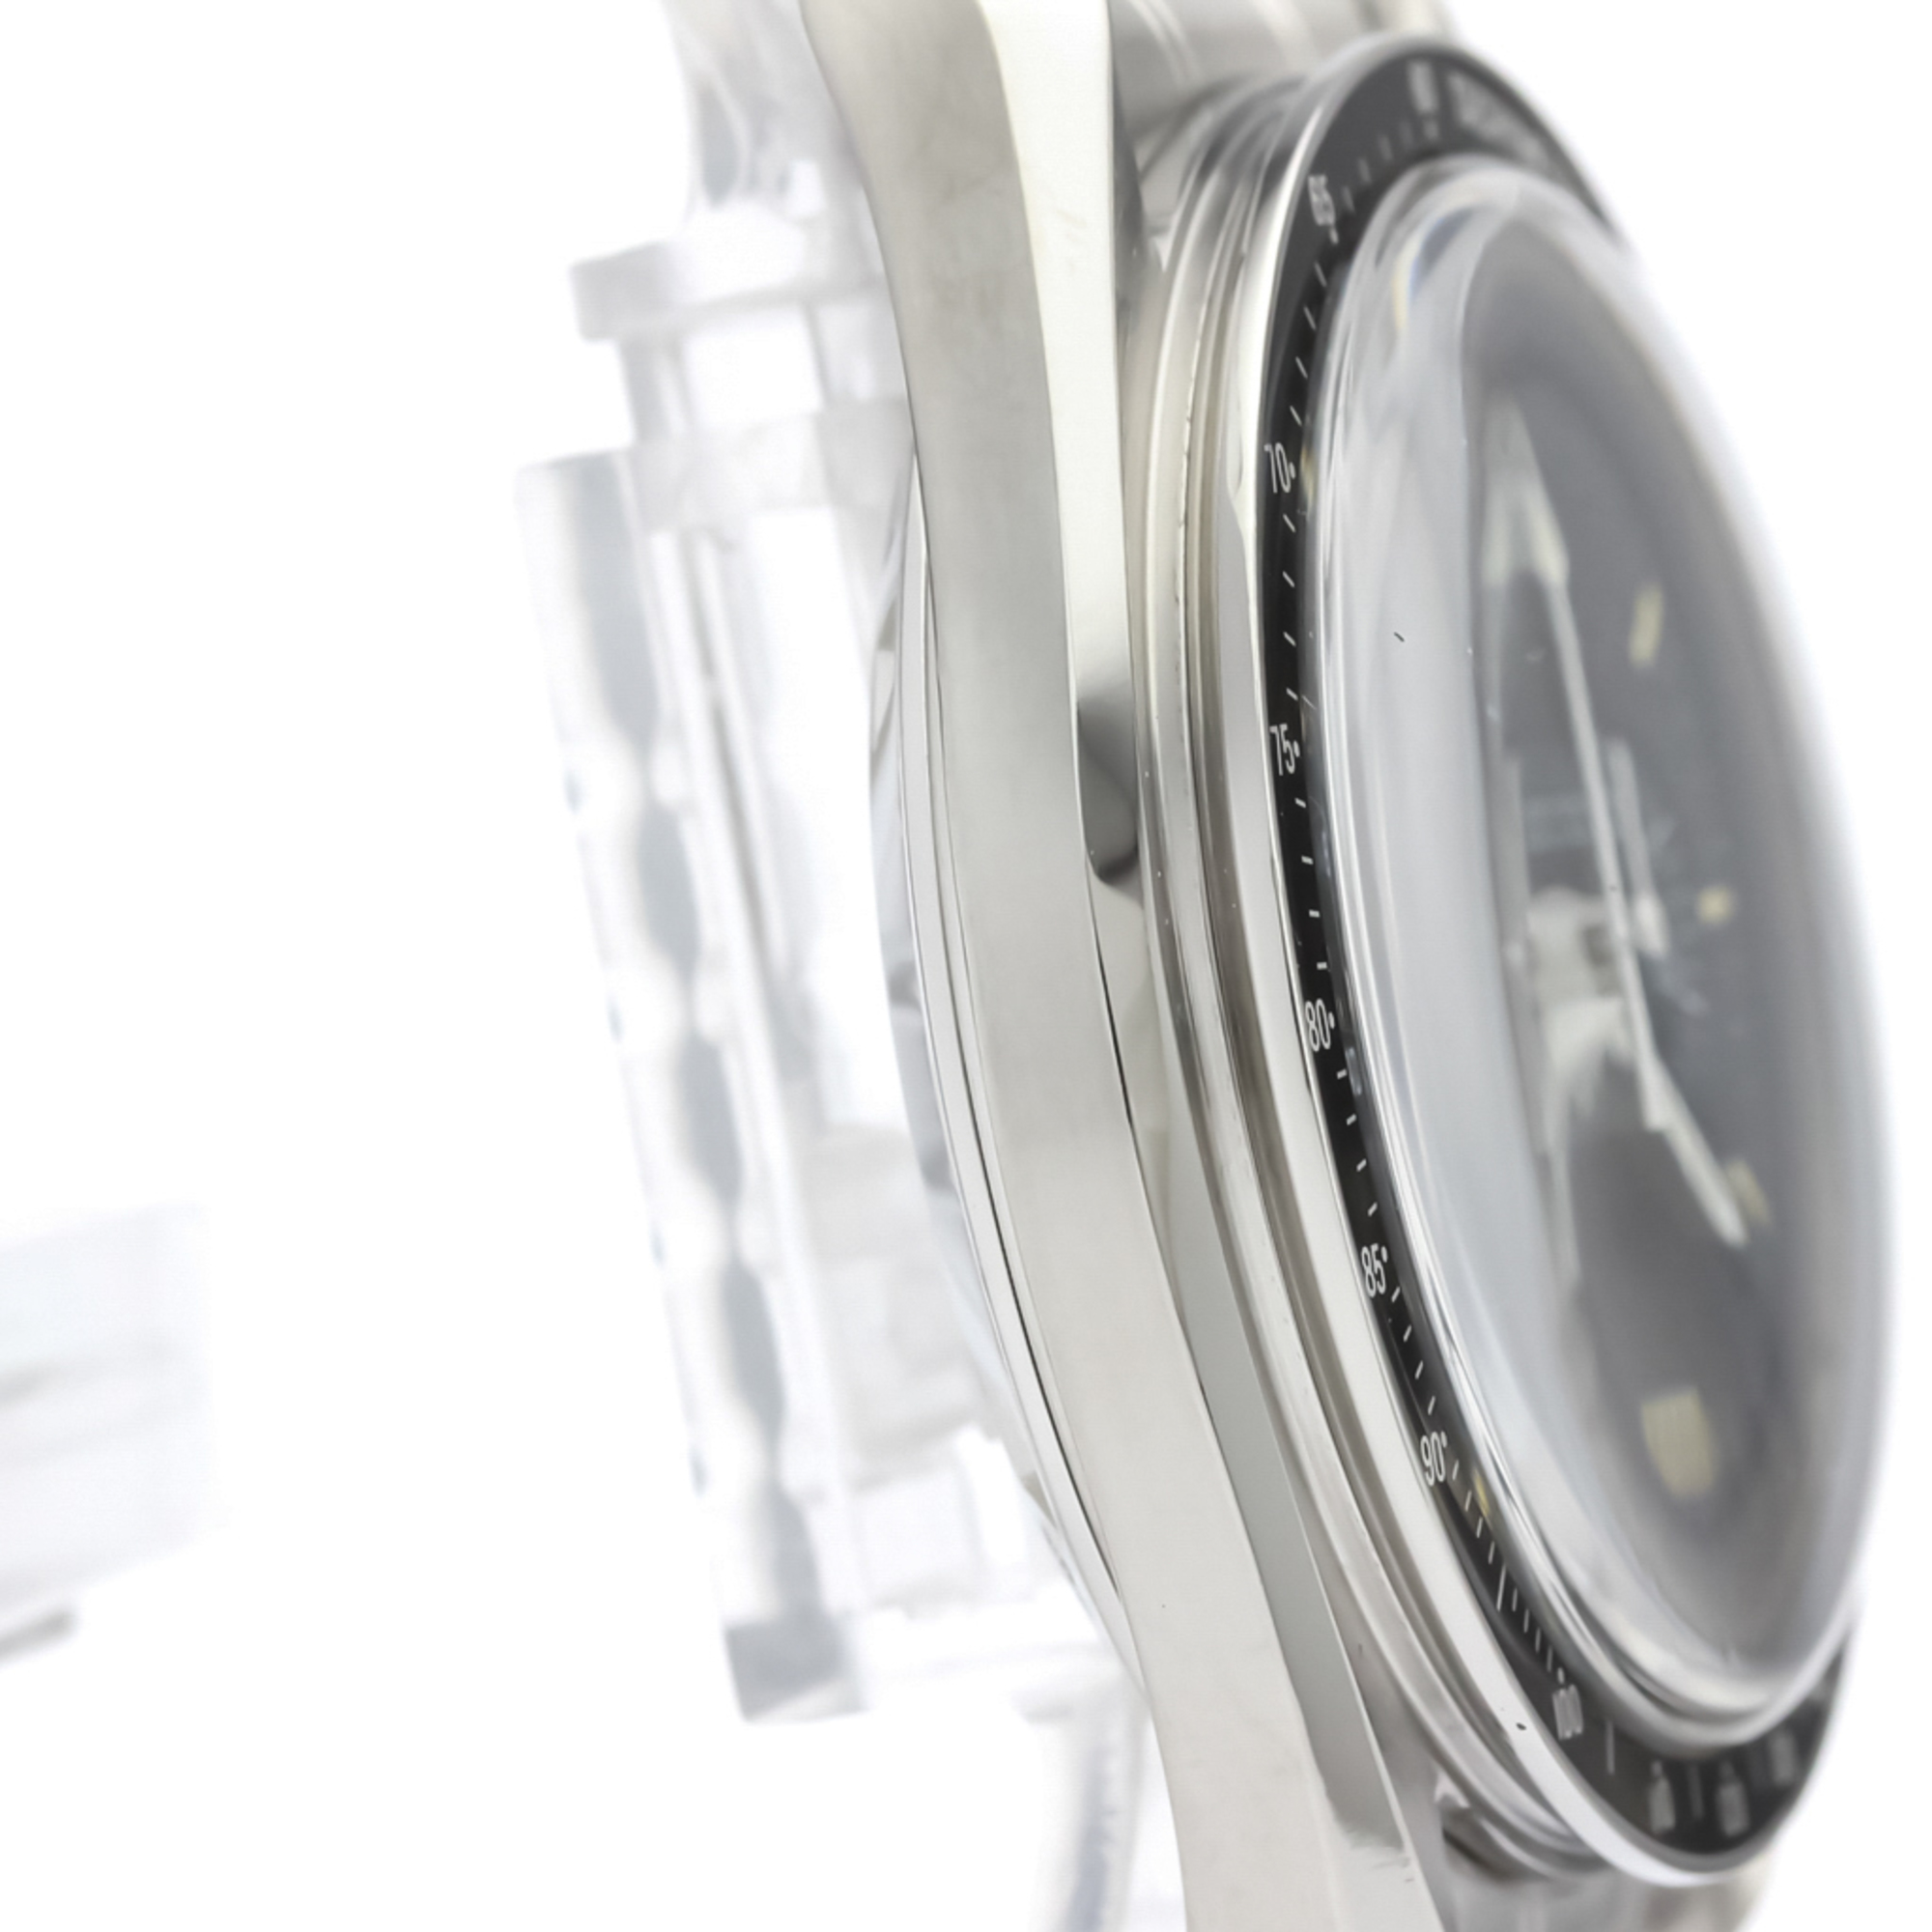 OMEGA Speedmaster Professional Sapphire Back Watch 3592.50